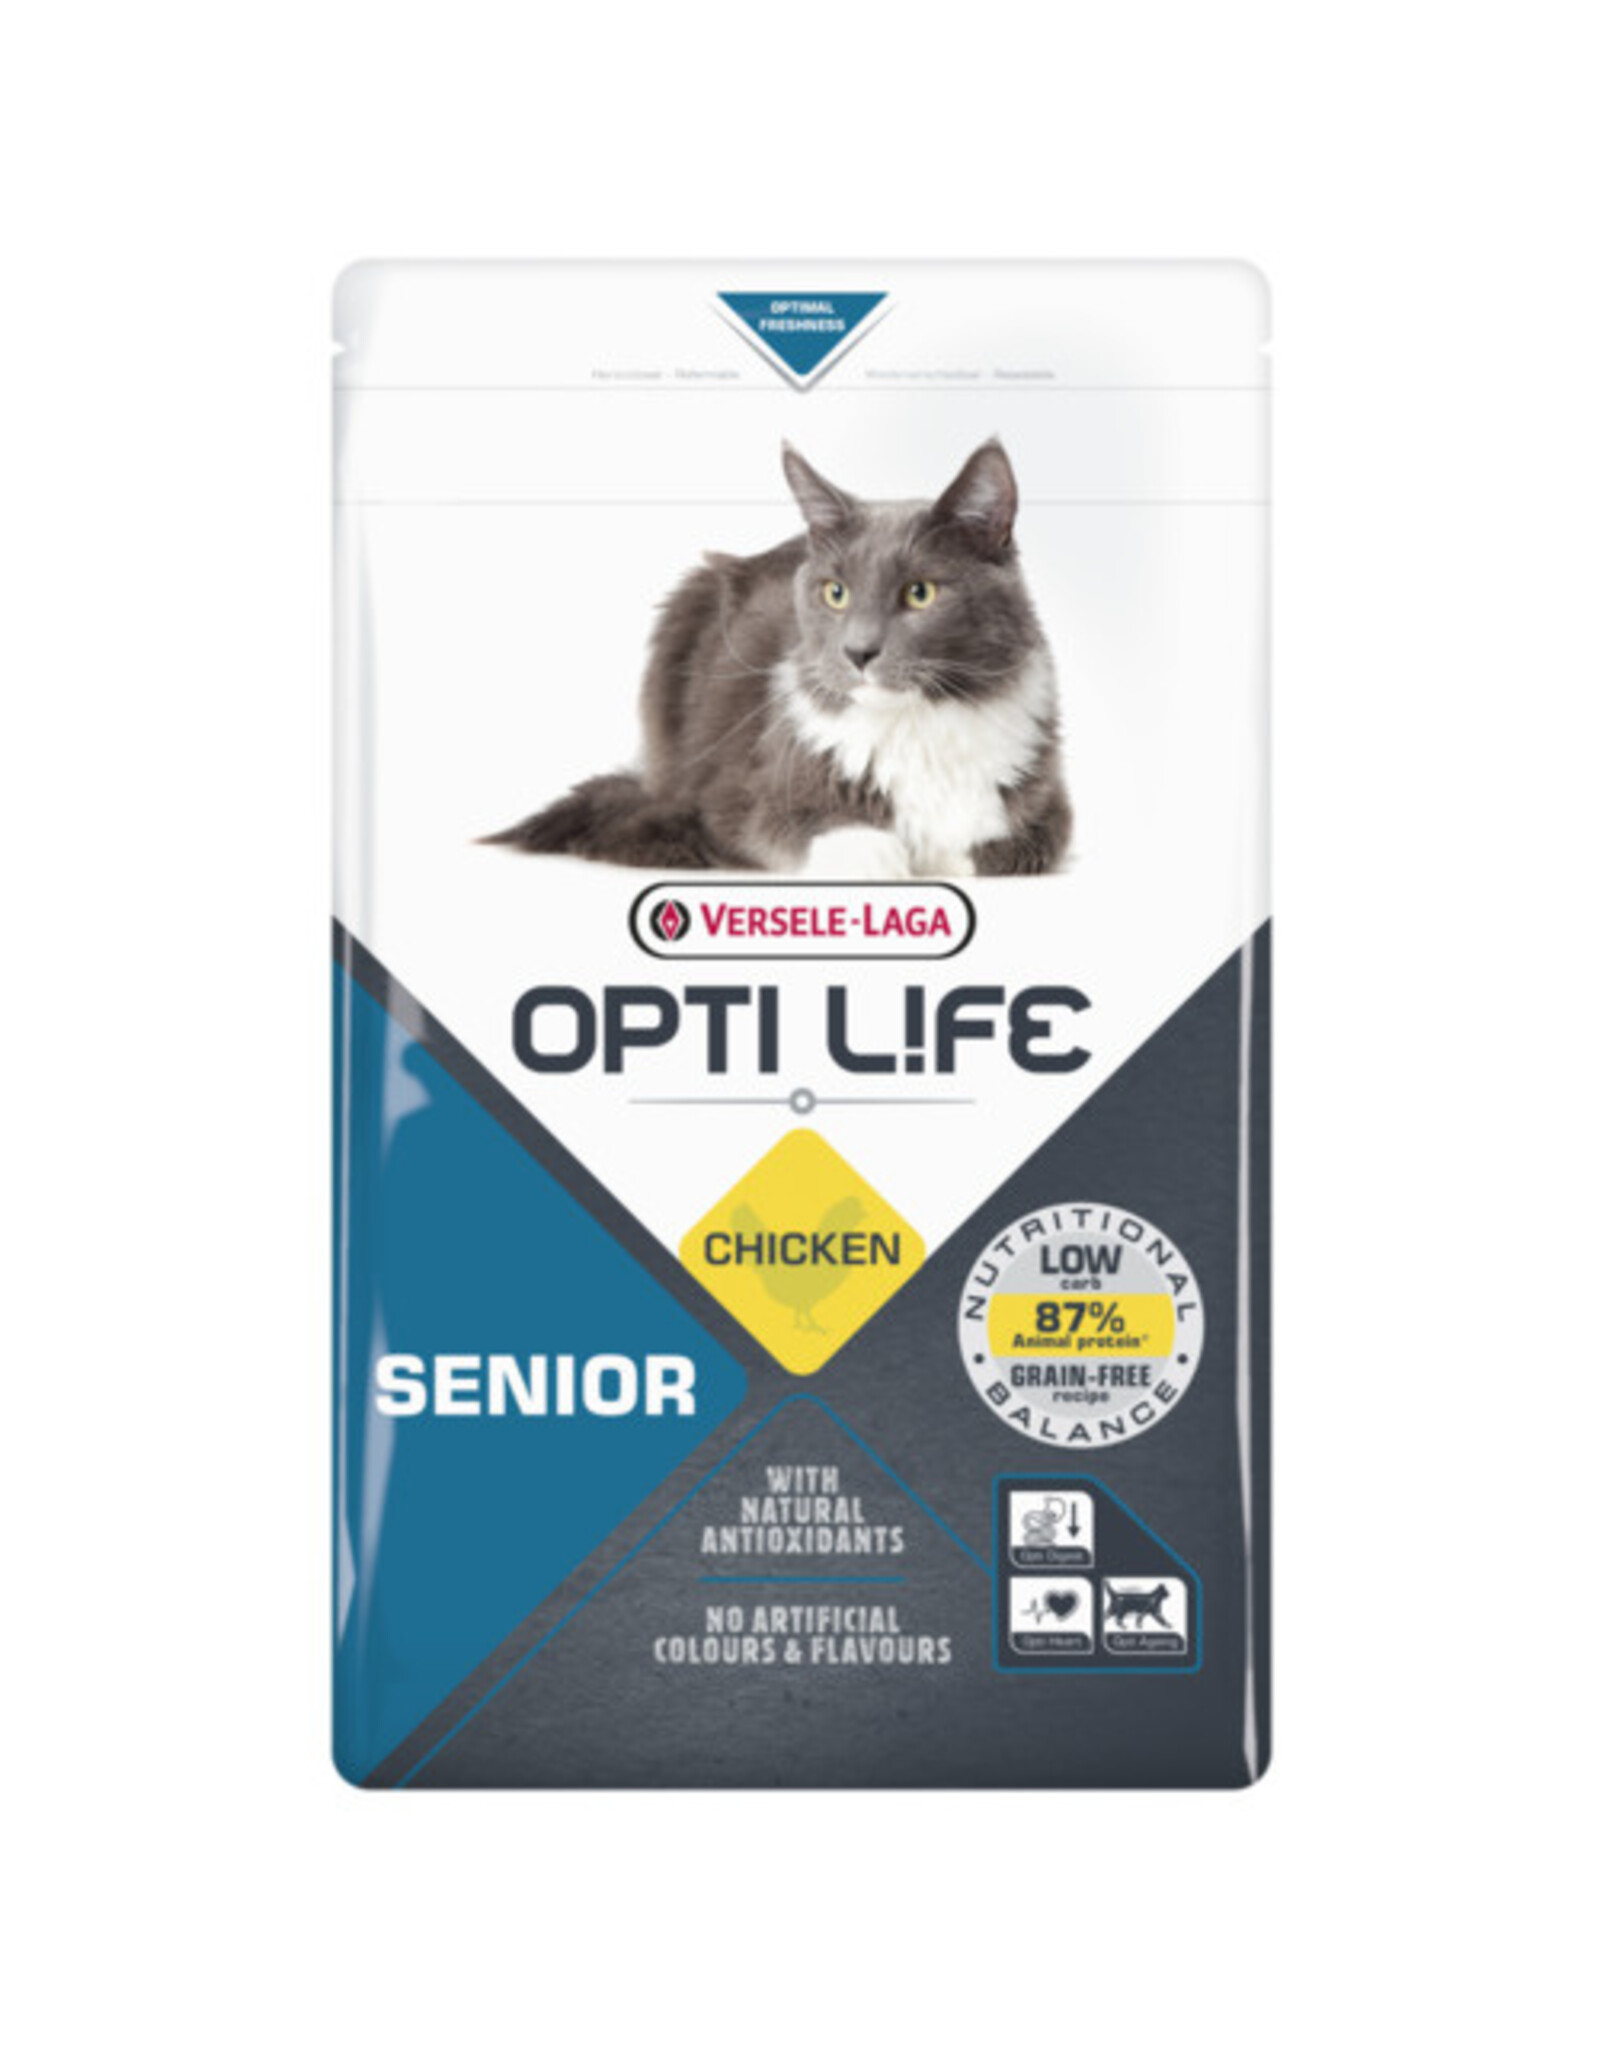 Versele laga Opti Life Cat Senior - 1 KG